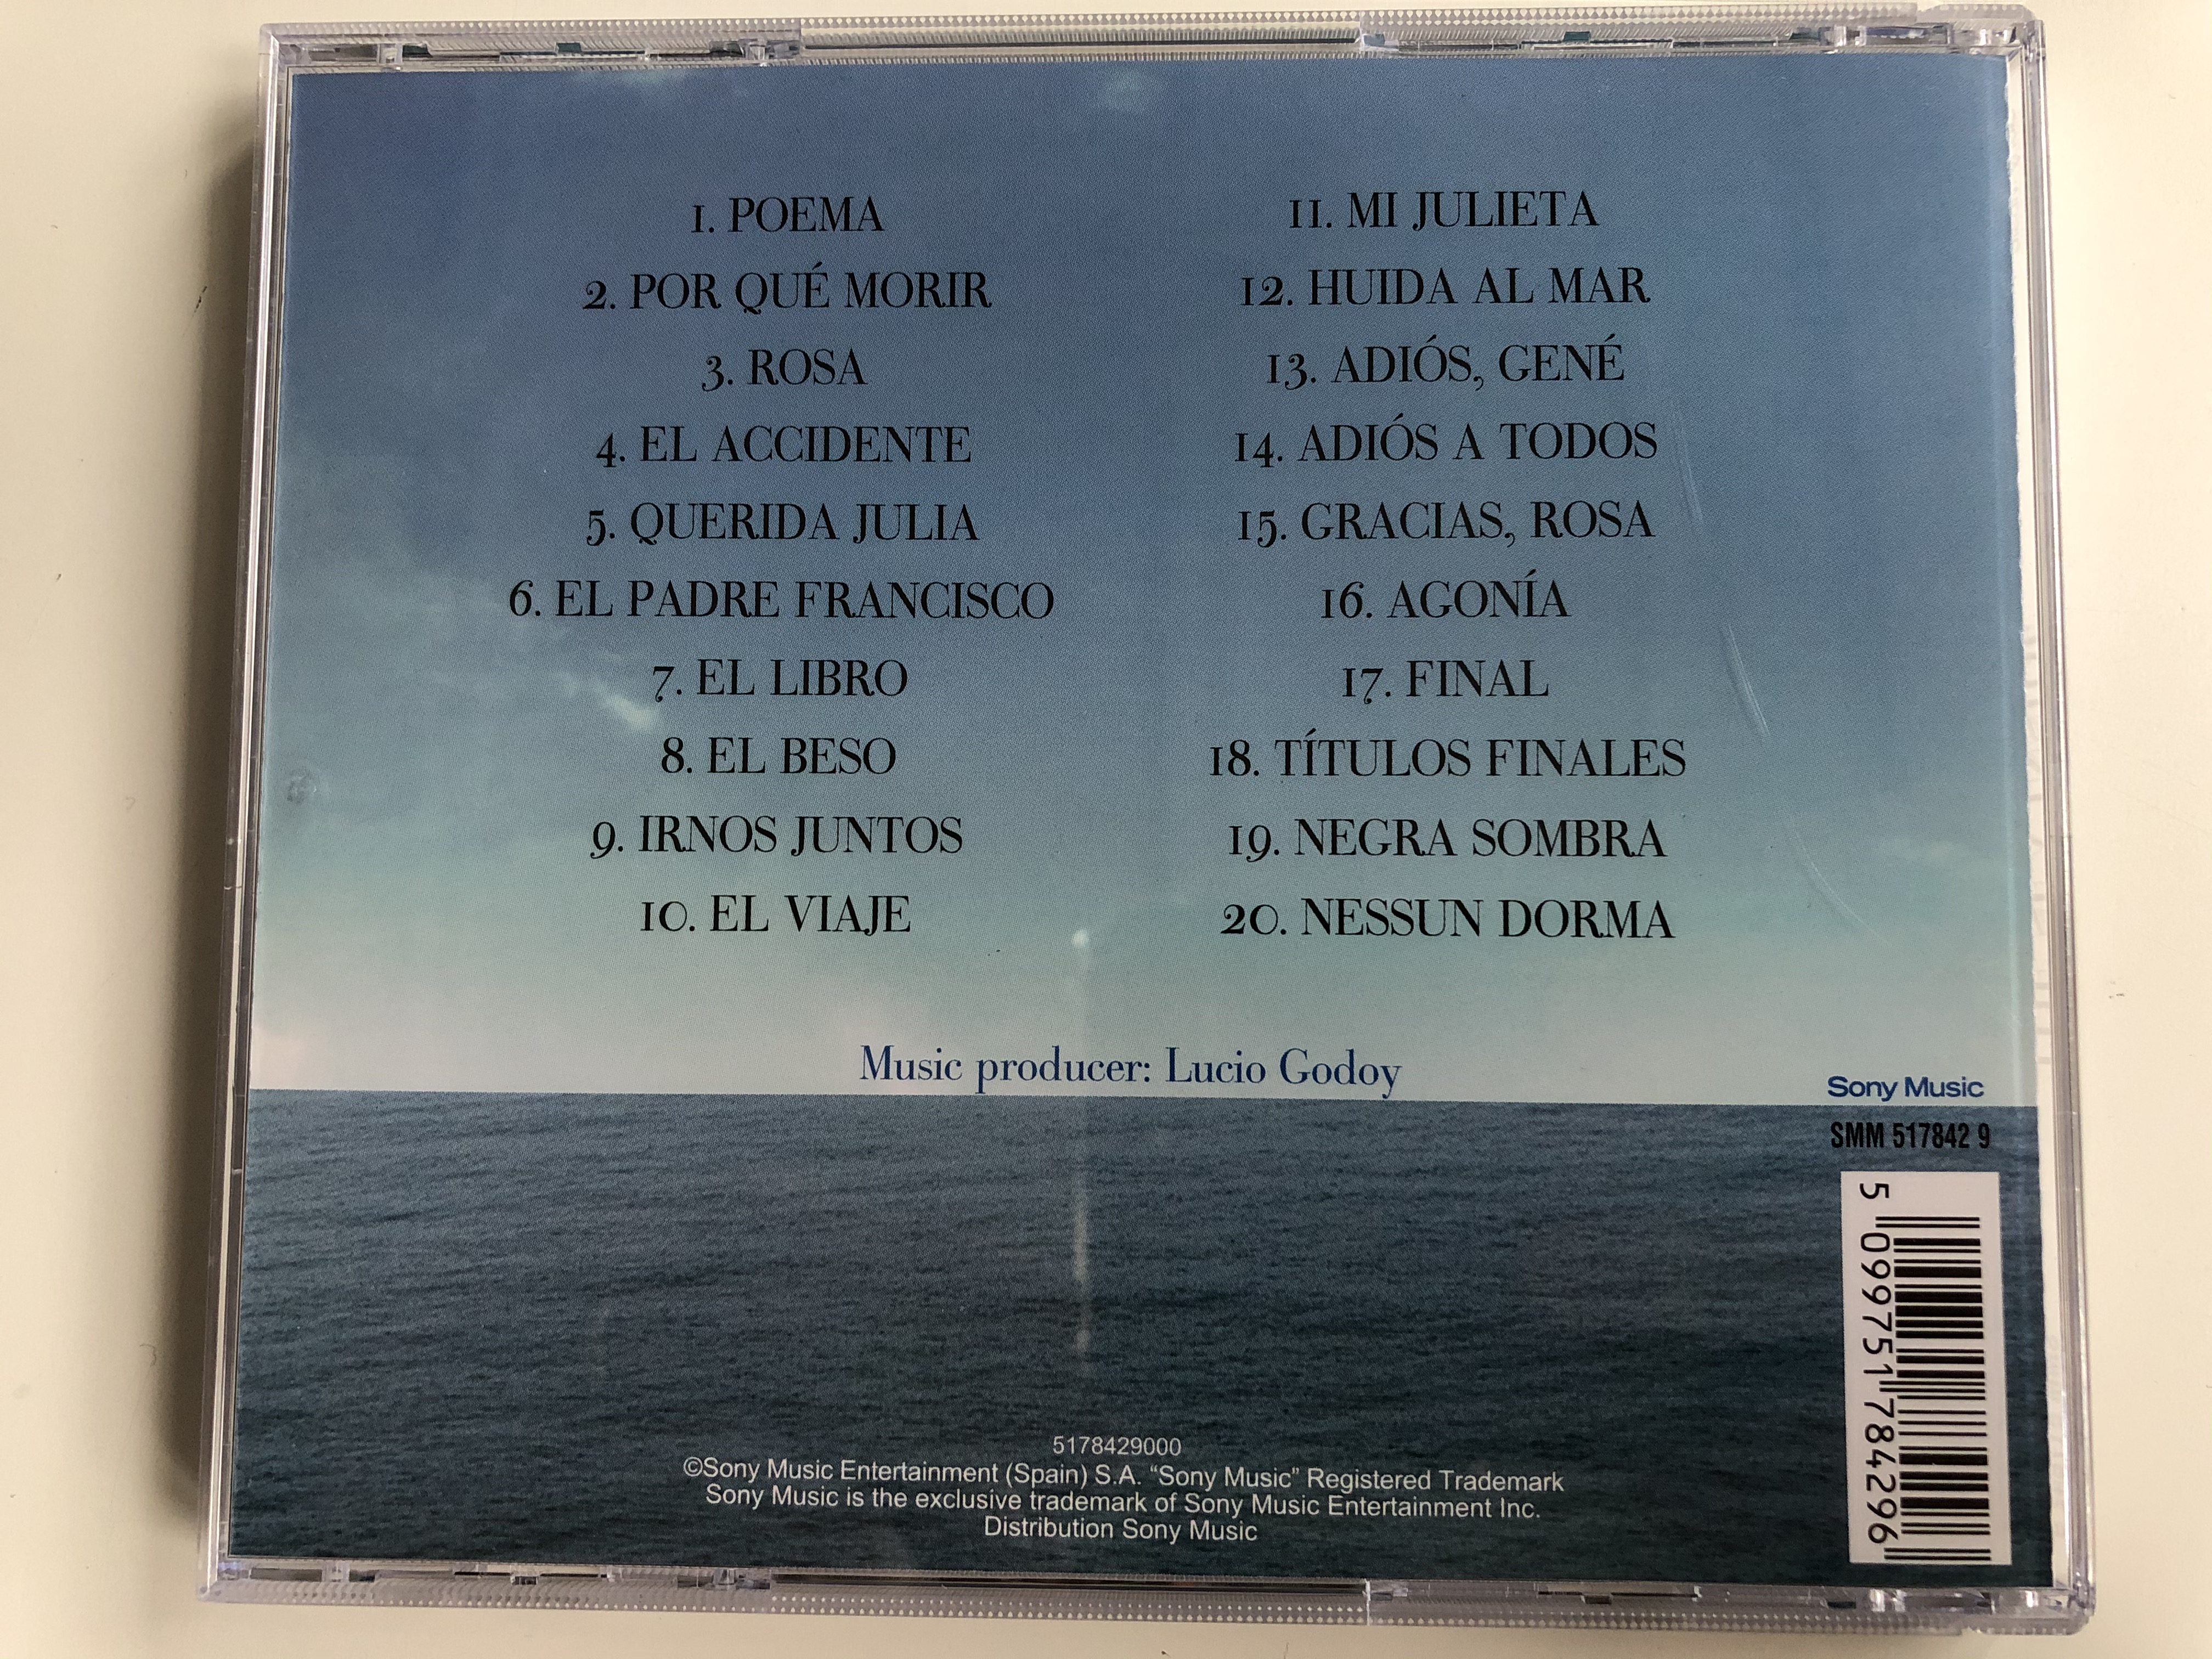 the-sea-inside-music-composed-by-alejandro-amen-bar-featuring-carlos-nunez-sony-music-audio-cd-smm-517842-9-4-.jpg